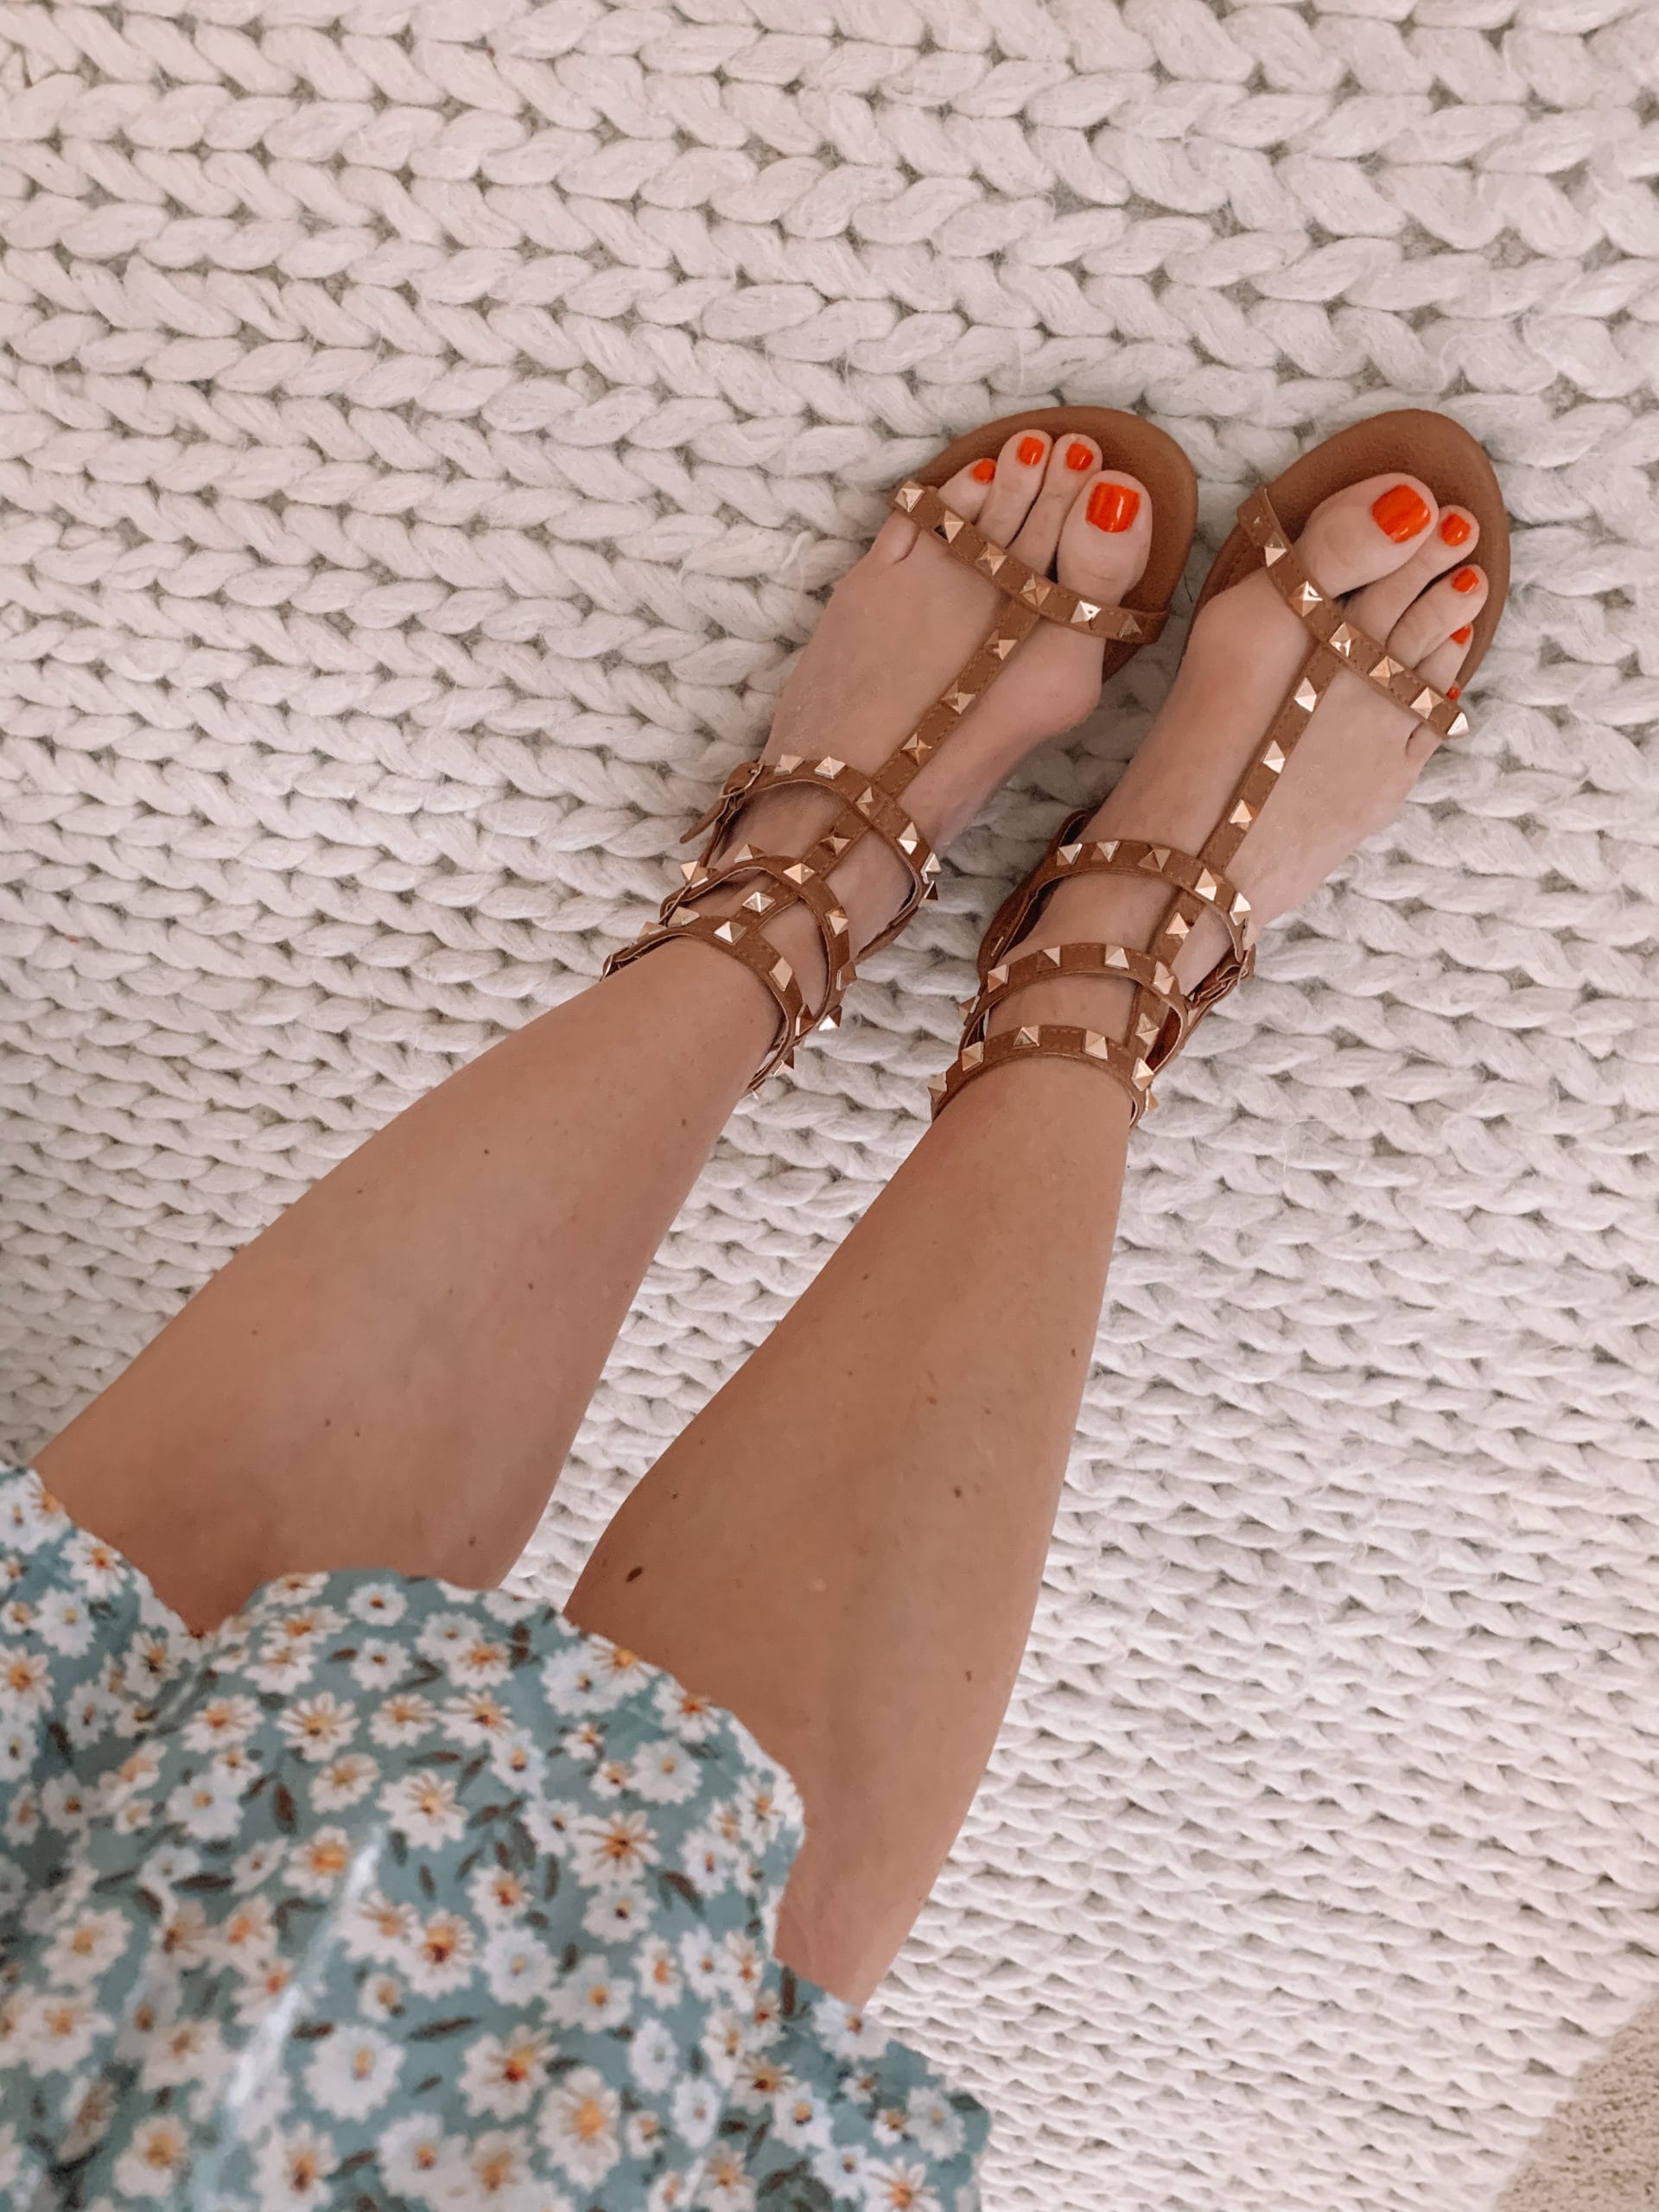 Amazon Fashion - Brown Studded Sandals 